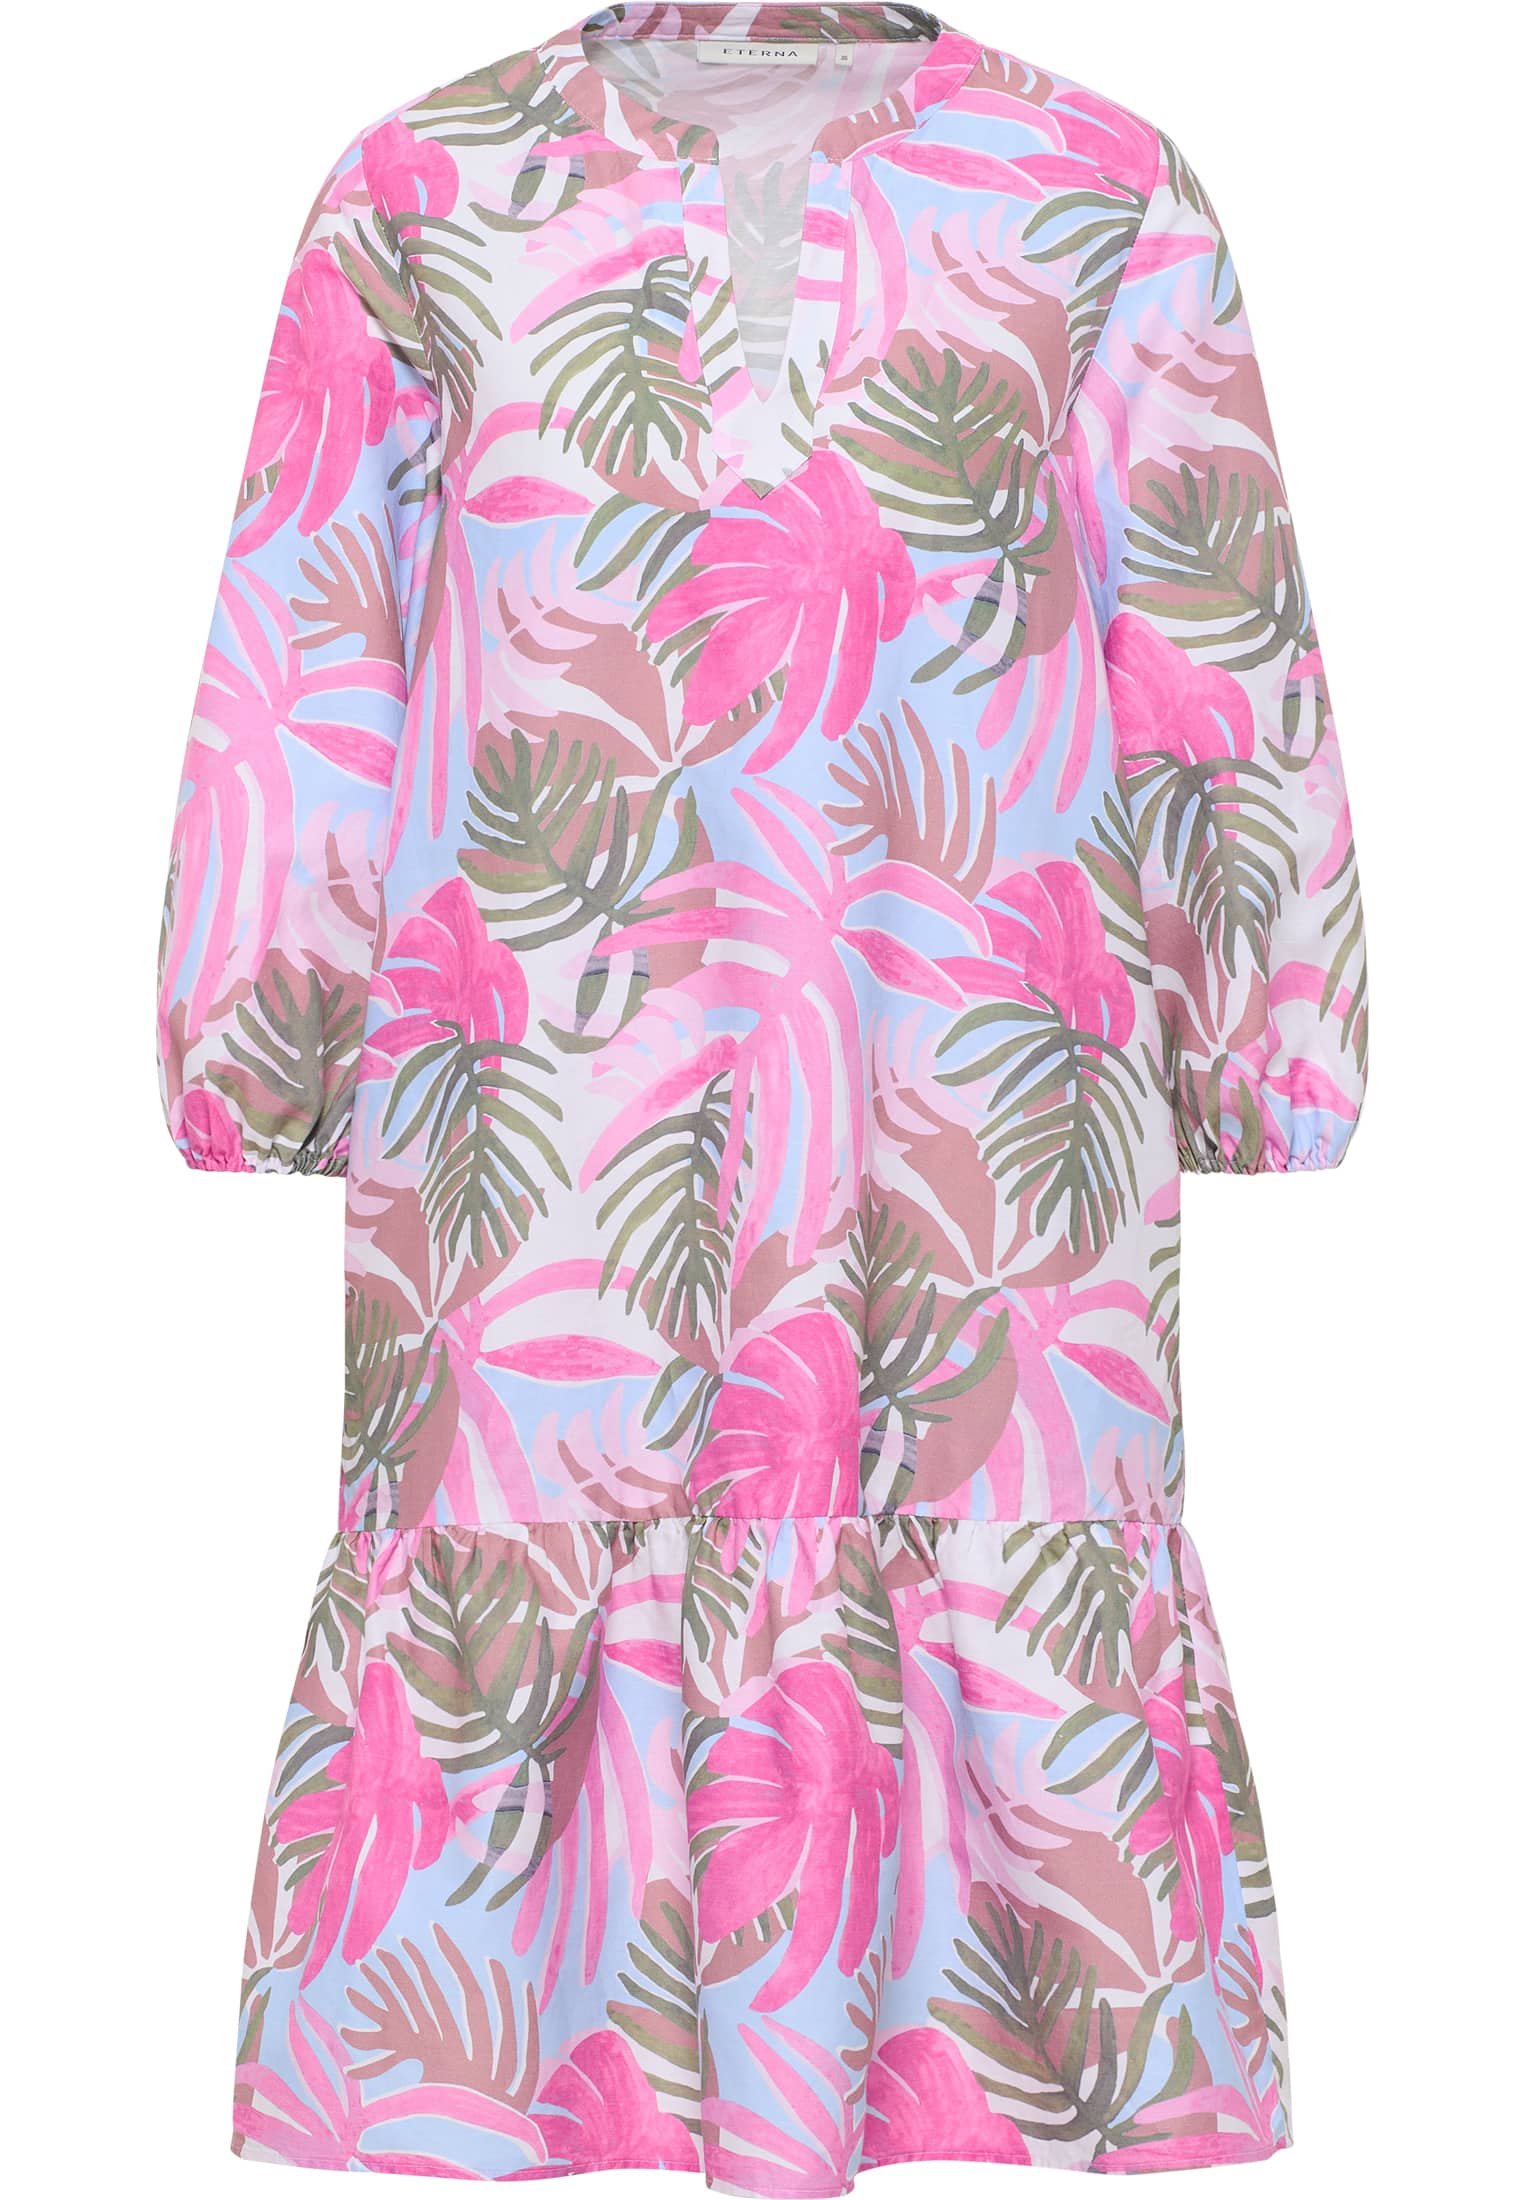 Shirt dress in rose 2DR00246-15-11-46-3/4 | sleeves 3/4 46 | | rose | printed